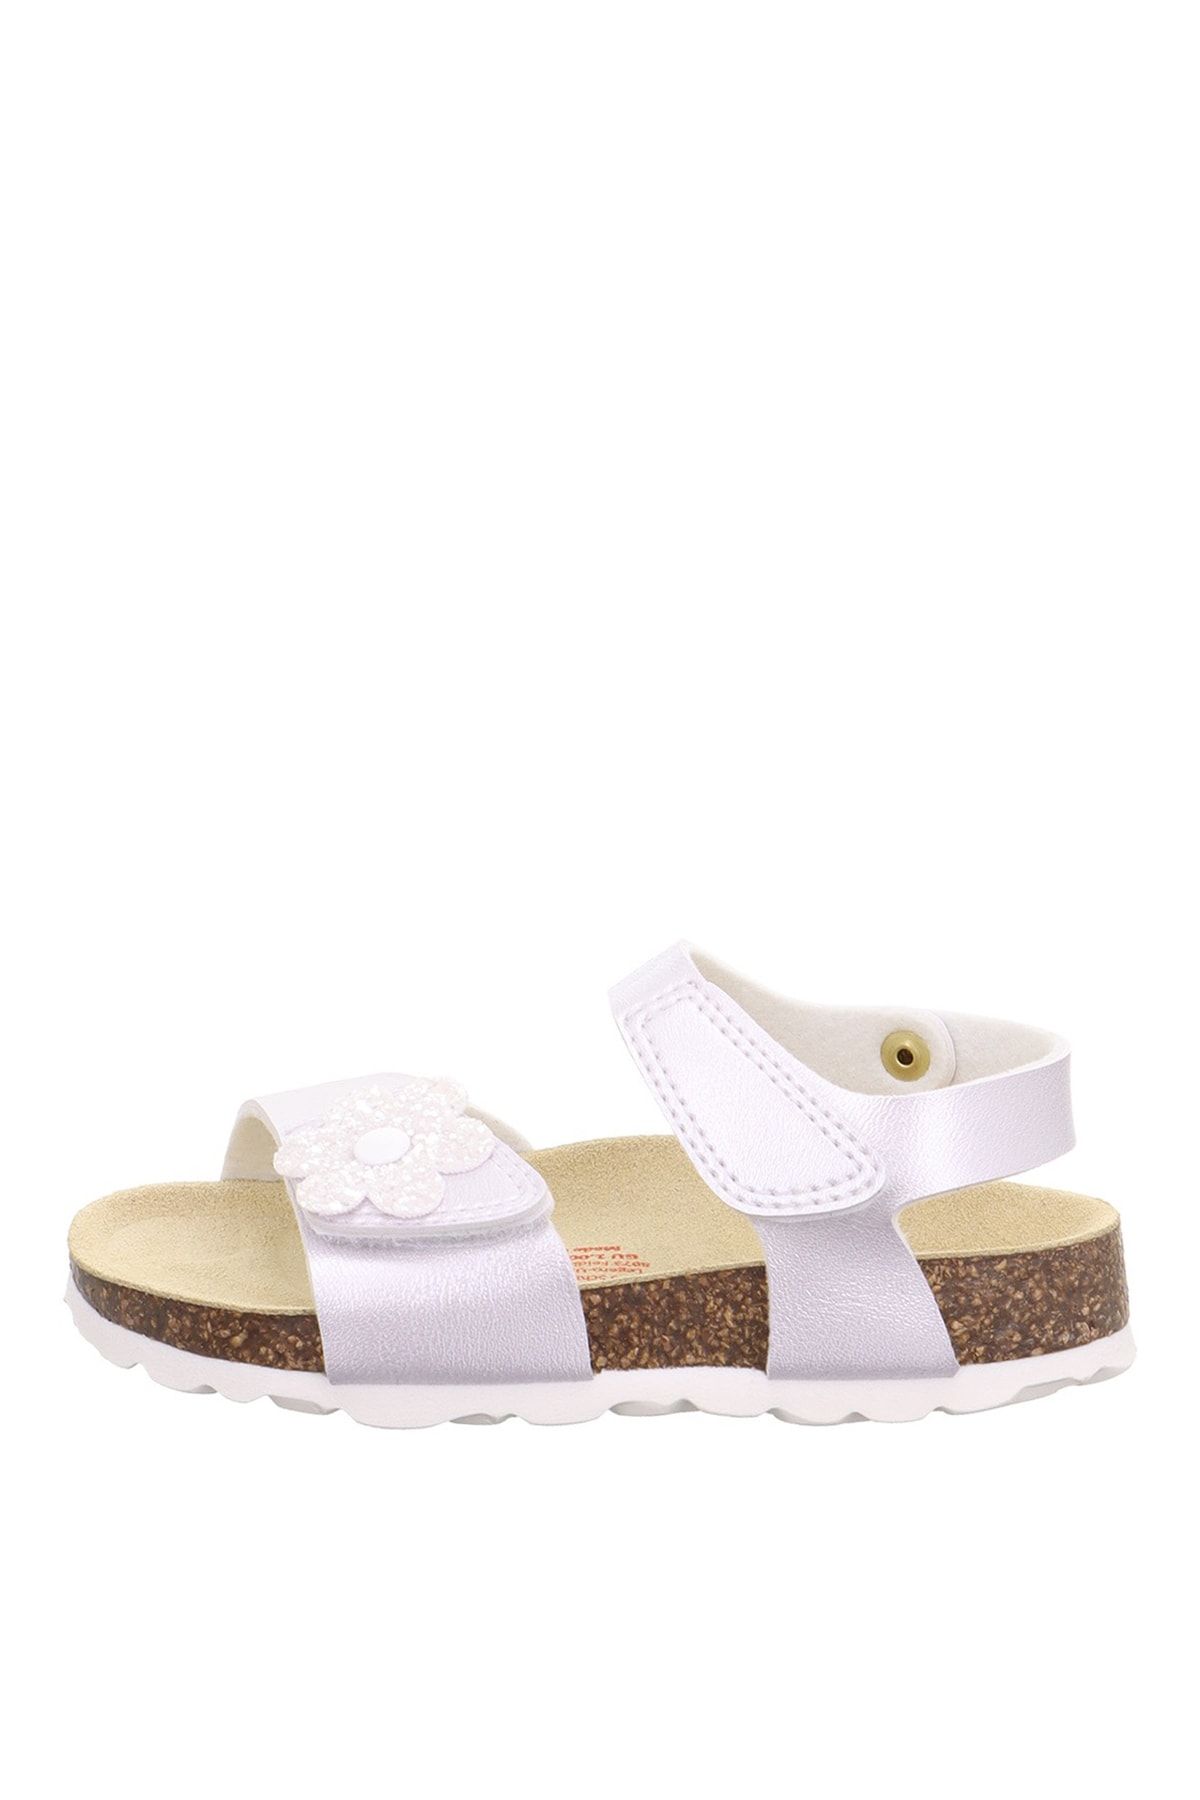 Superfit Beyaz Kız Çocuk Sandalet Bıos 1-000118-1010-3